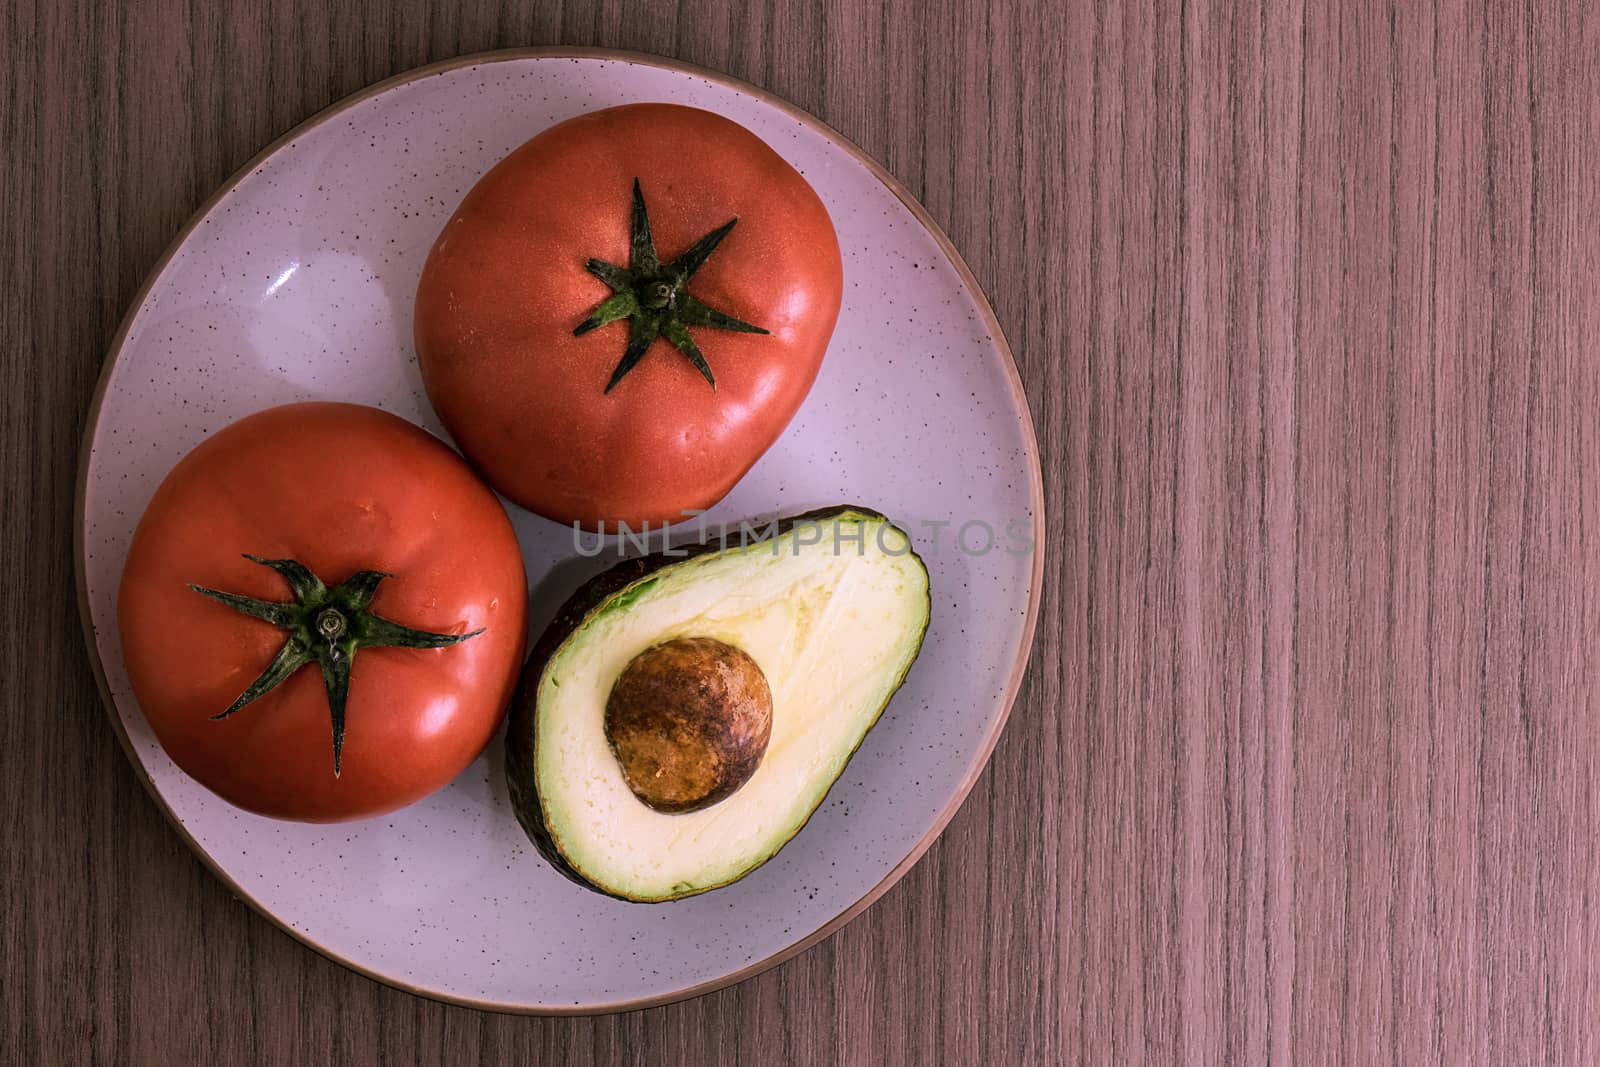 Avocado and tomatoes by dalomo84